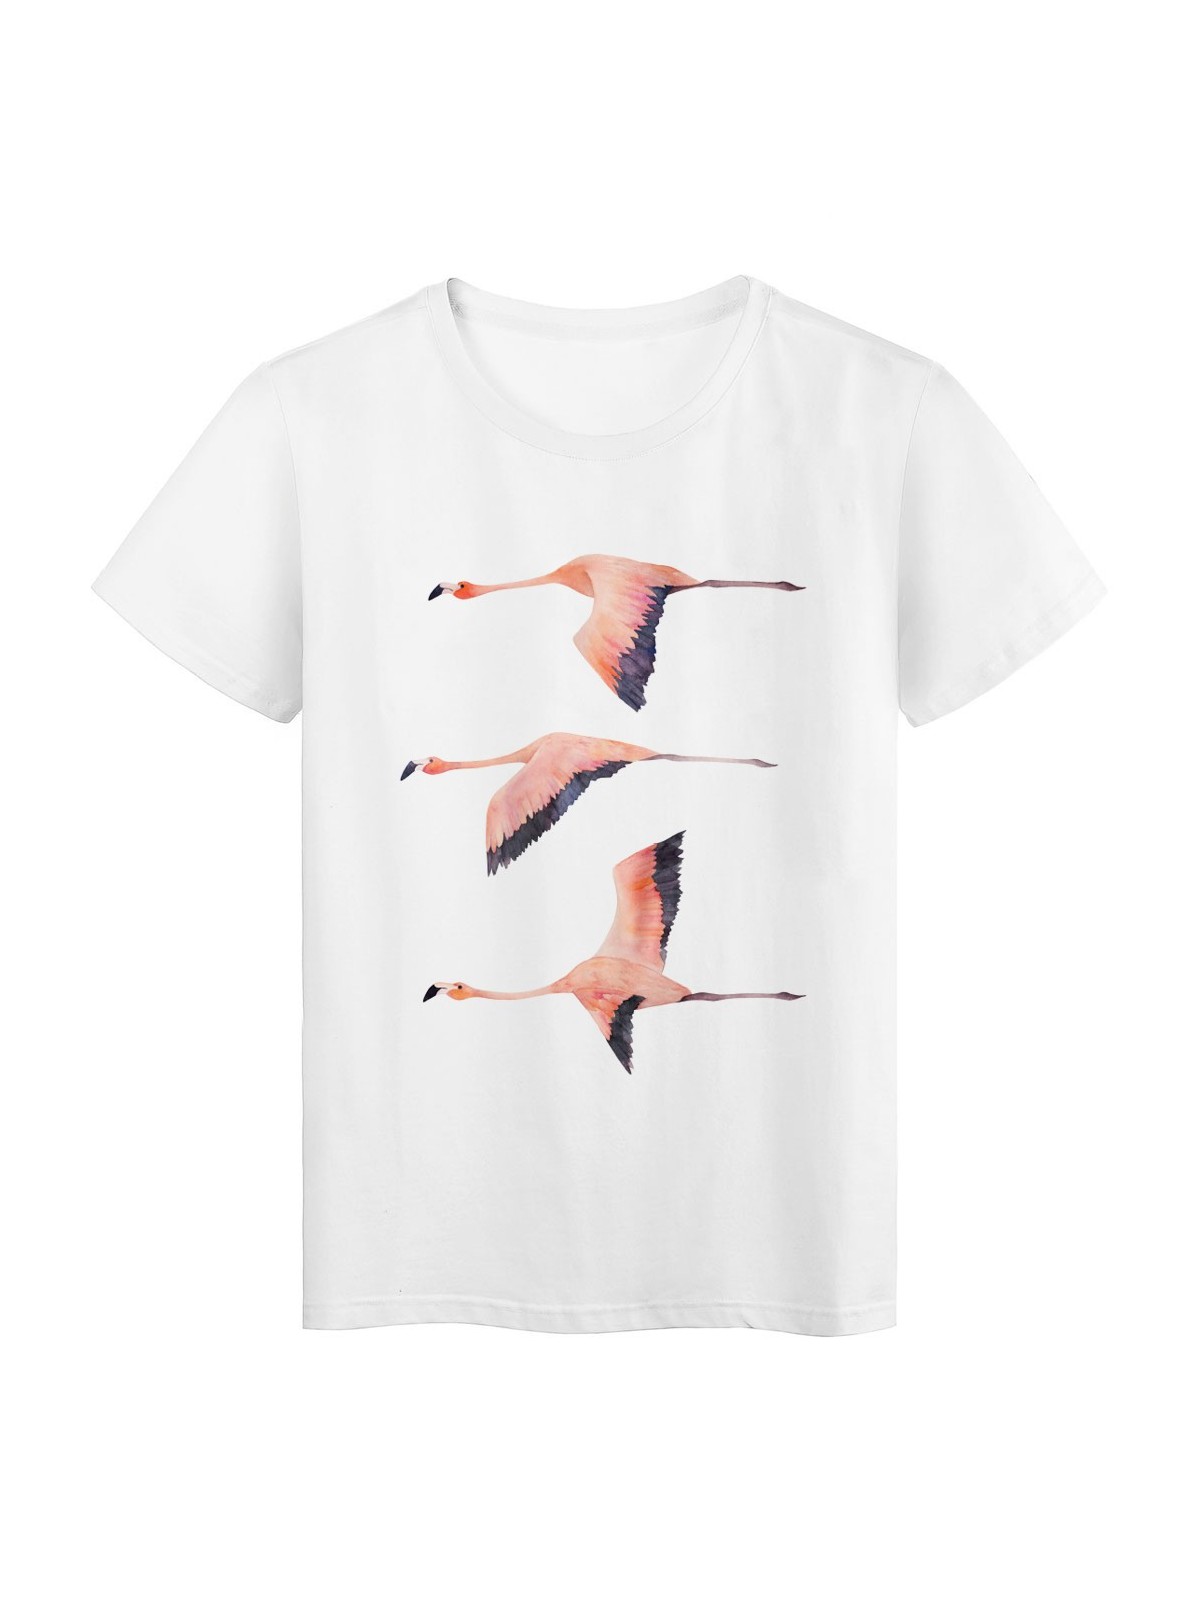 T-Shirt blanc design Flamants roses rÃ©f Tee shirt 2147